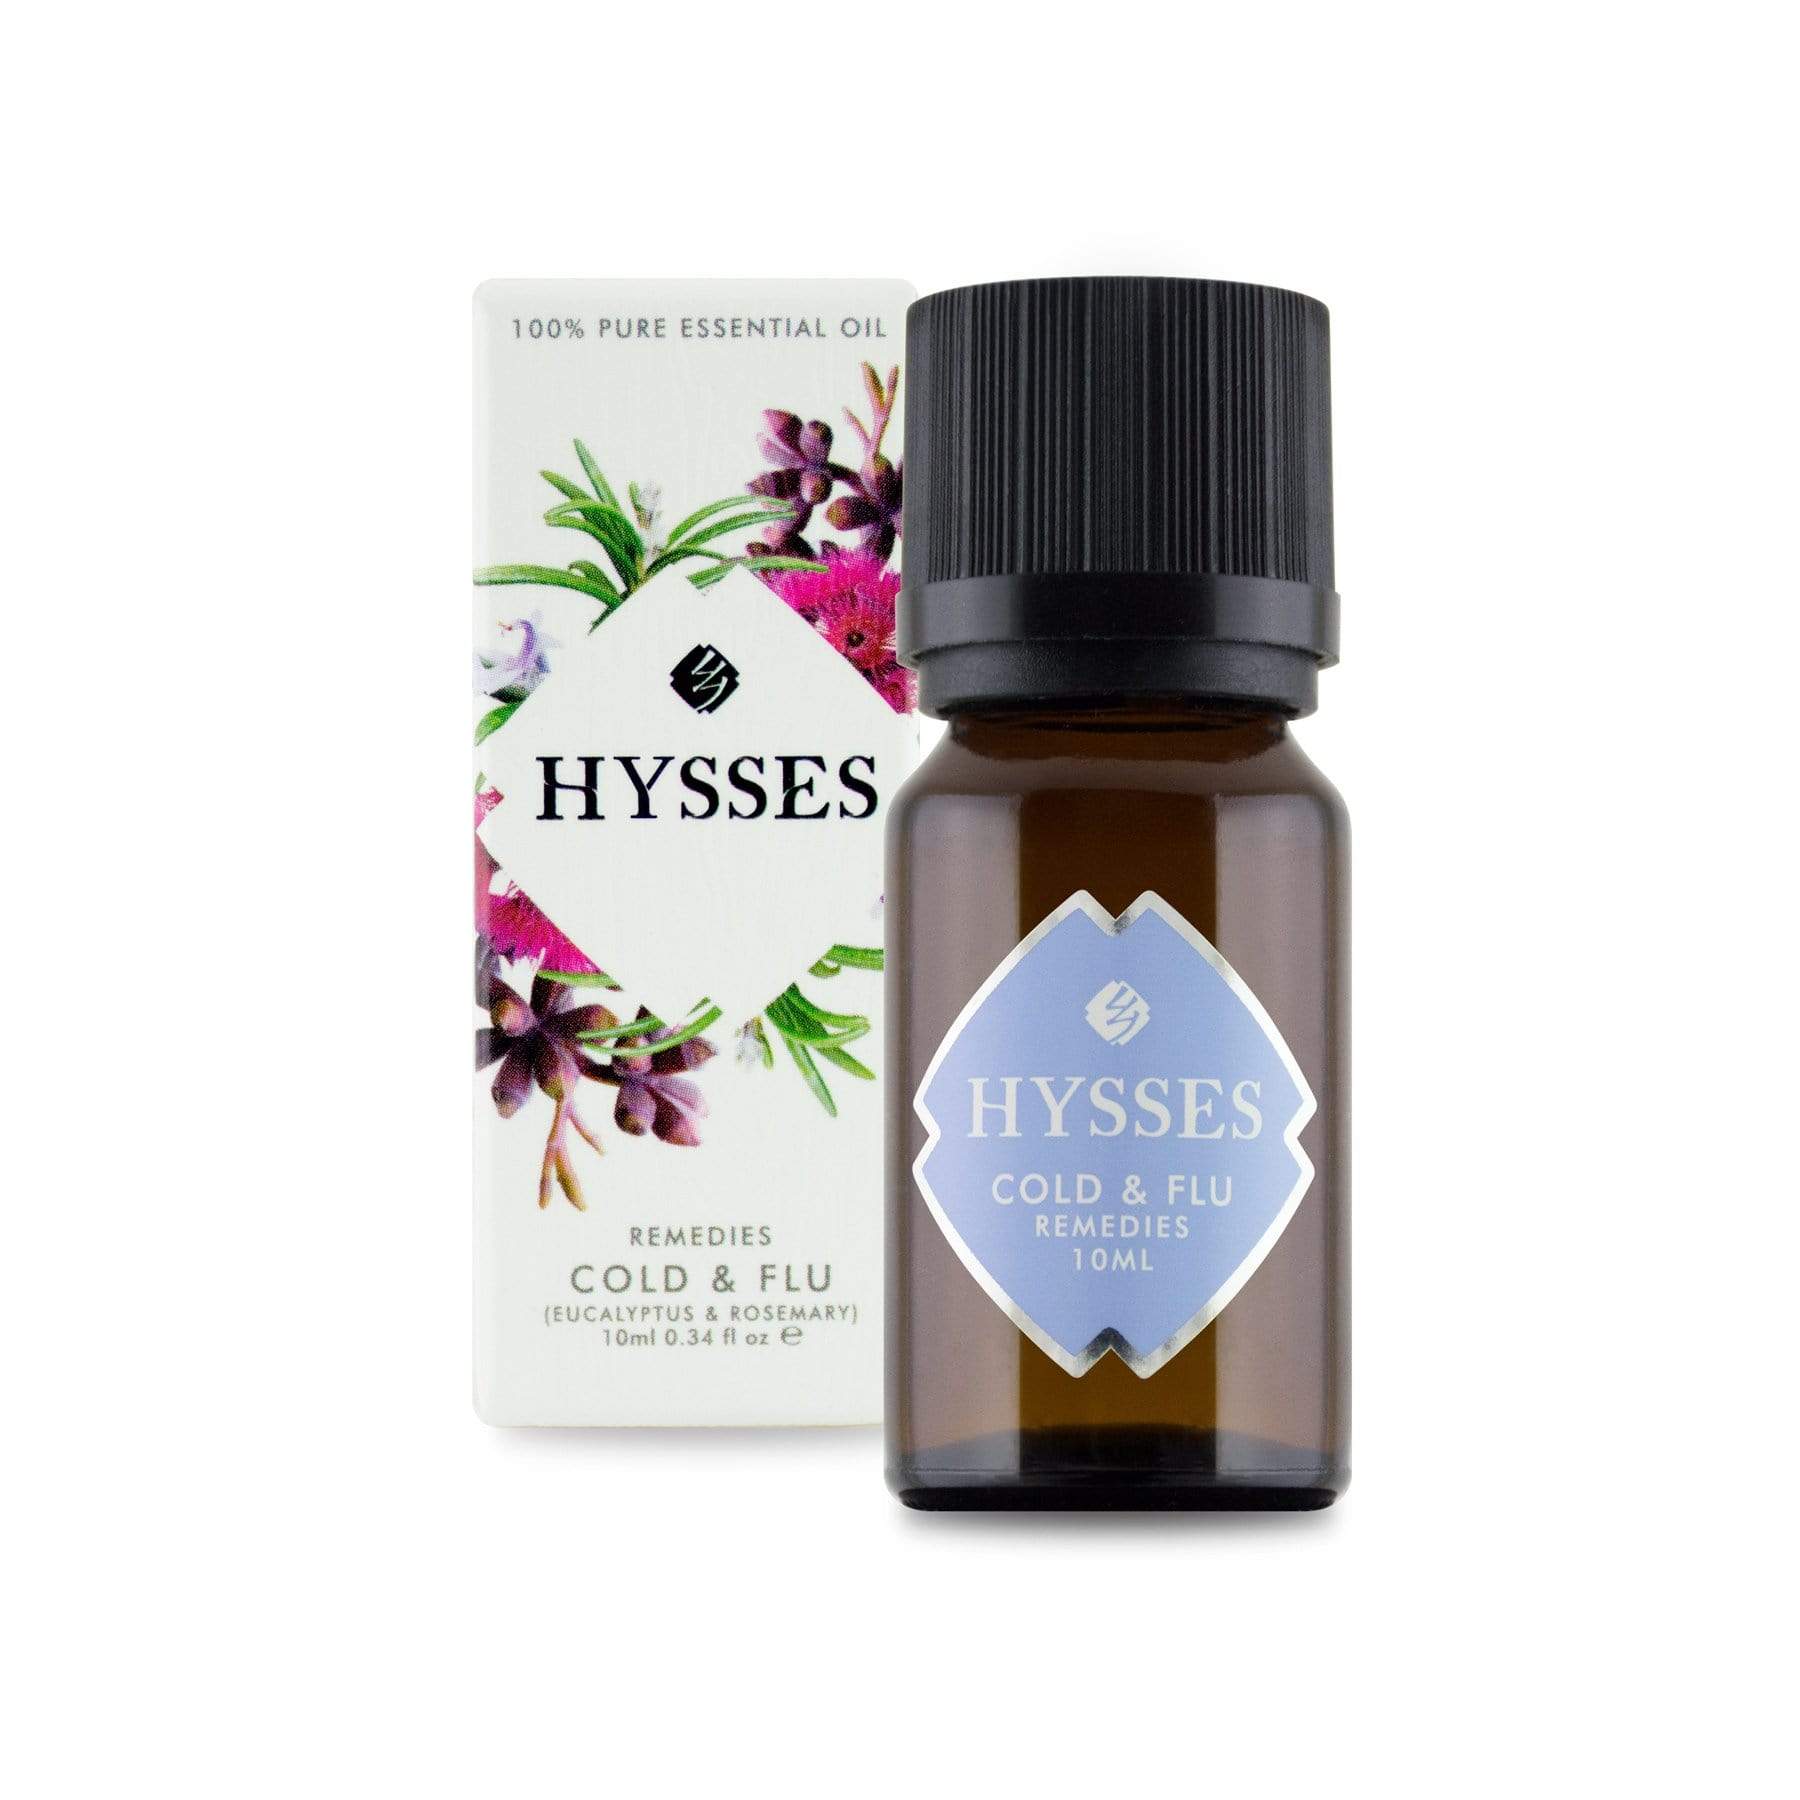 Hysses Essential Oil 10ml Remedies, Cold & Flu